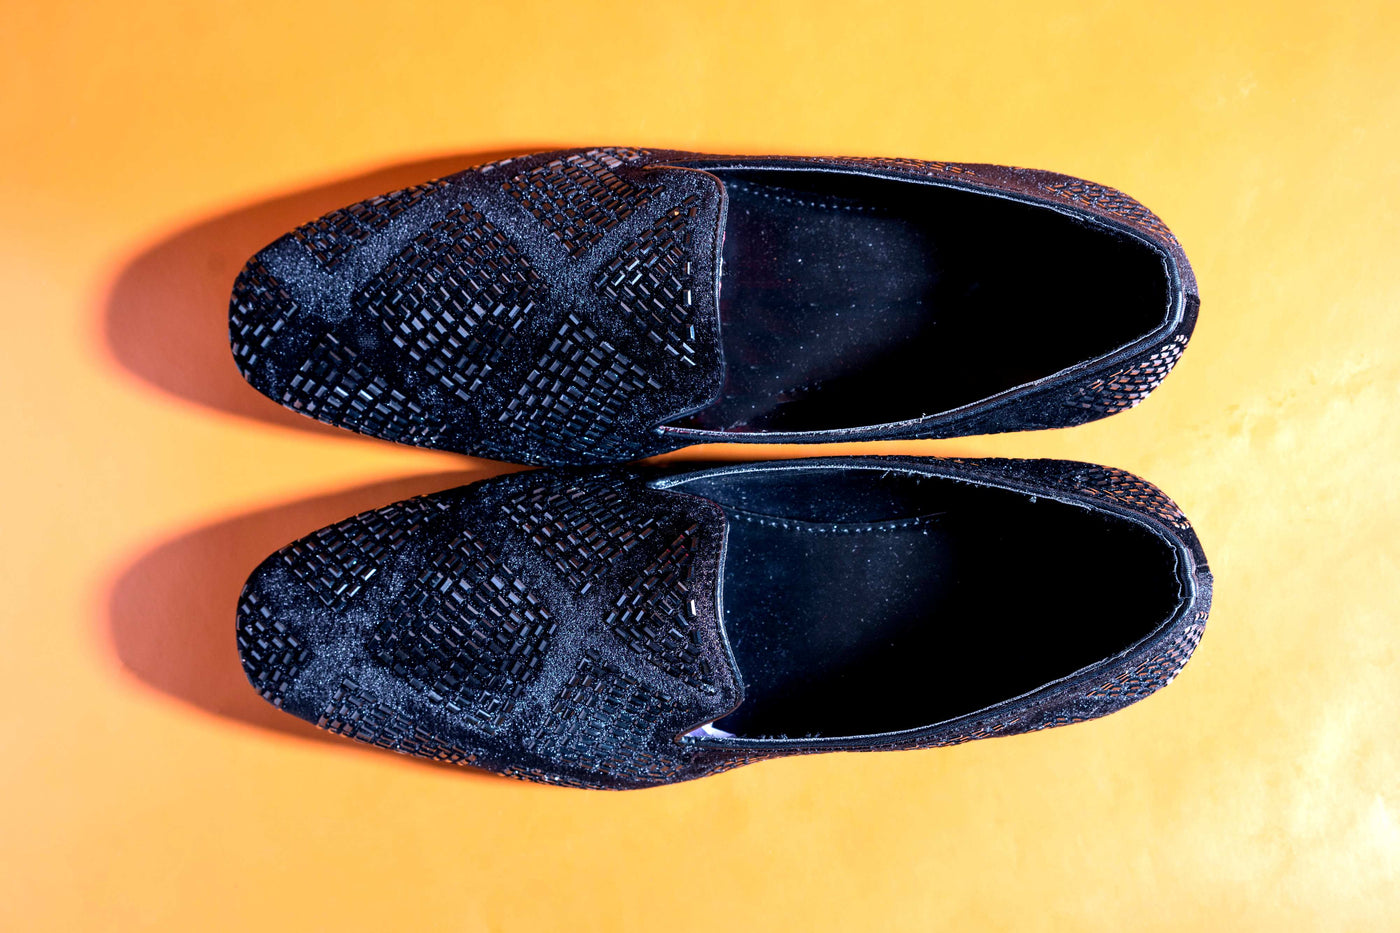 Stylish Studded Moccasins Men's Fashion Wedding Rivet Leather High Quality Slip On Flat Loafer-Jonas Paramount